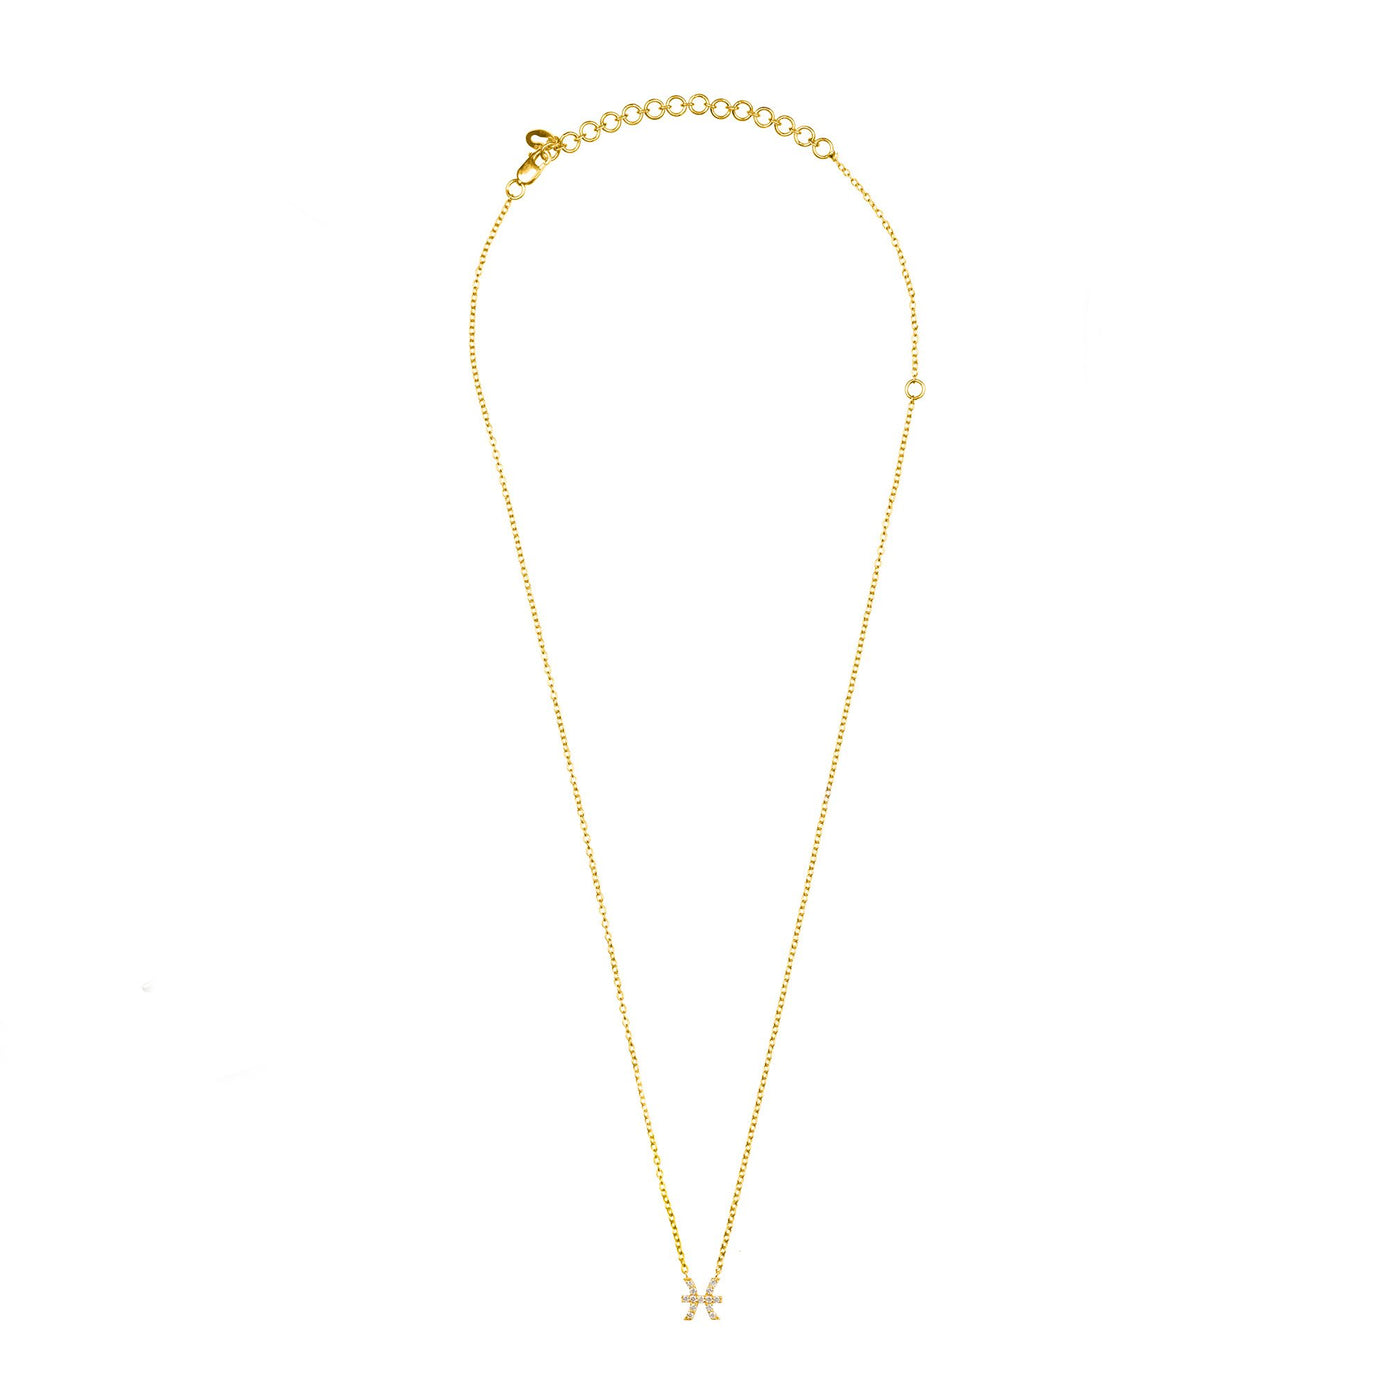 Pisces - necklace - 22 carat gold plated - diamonds